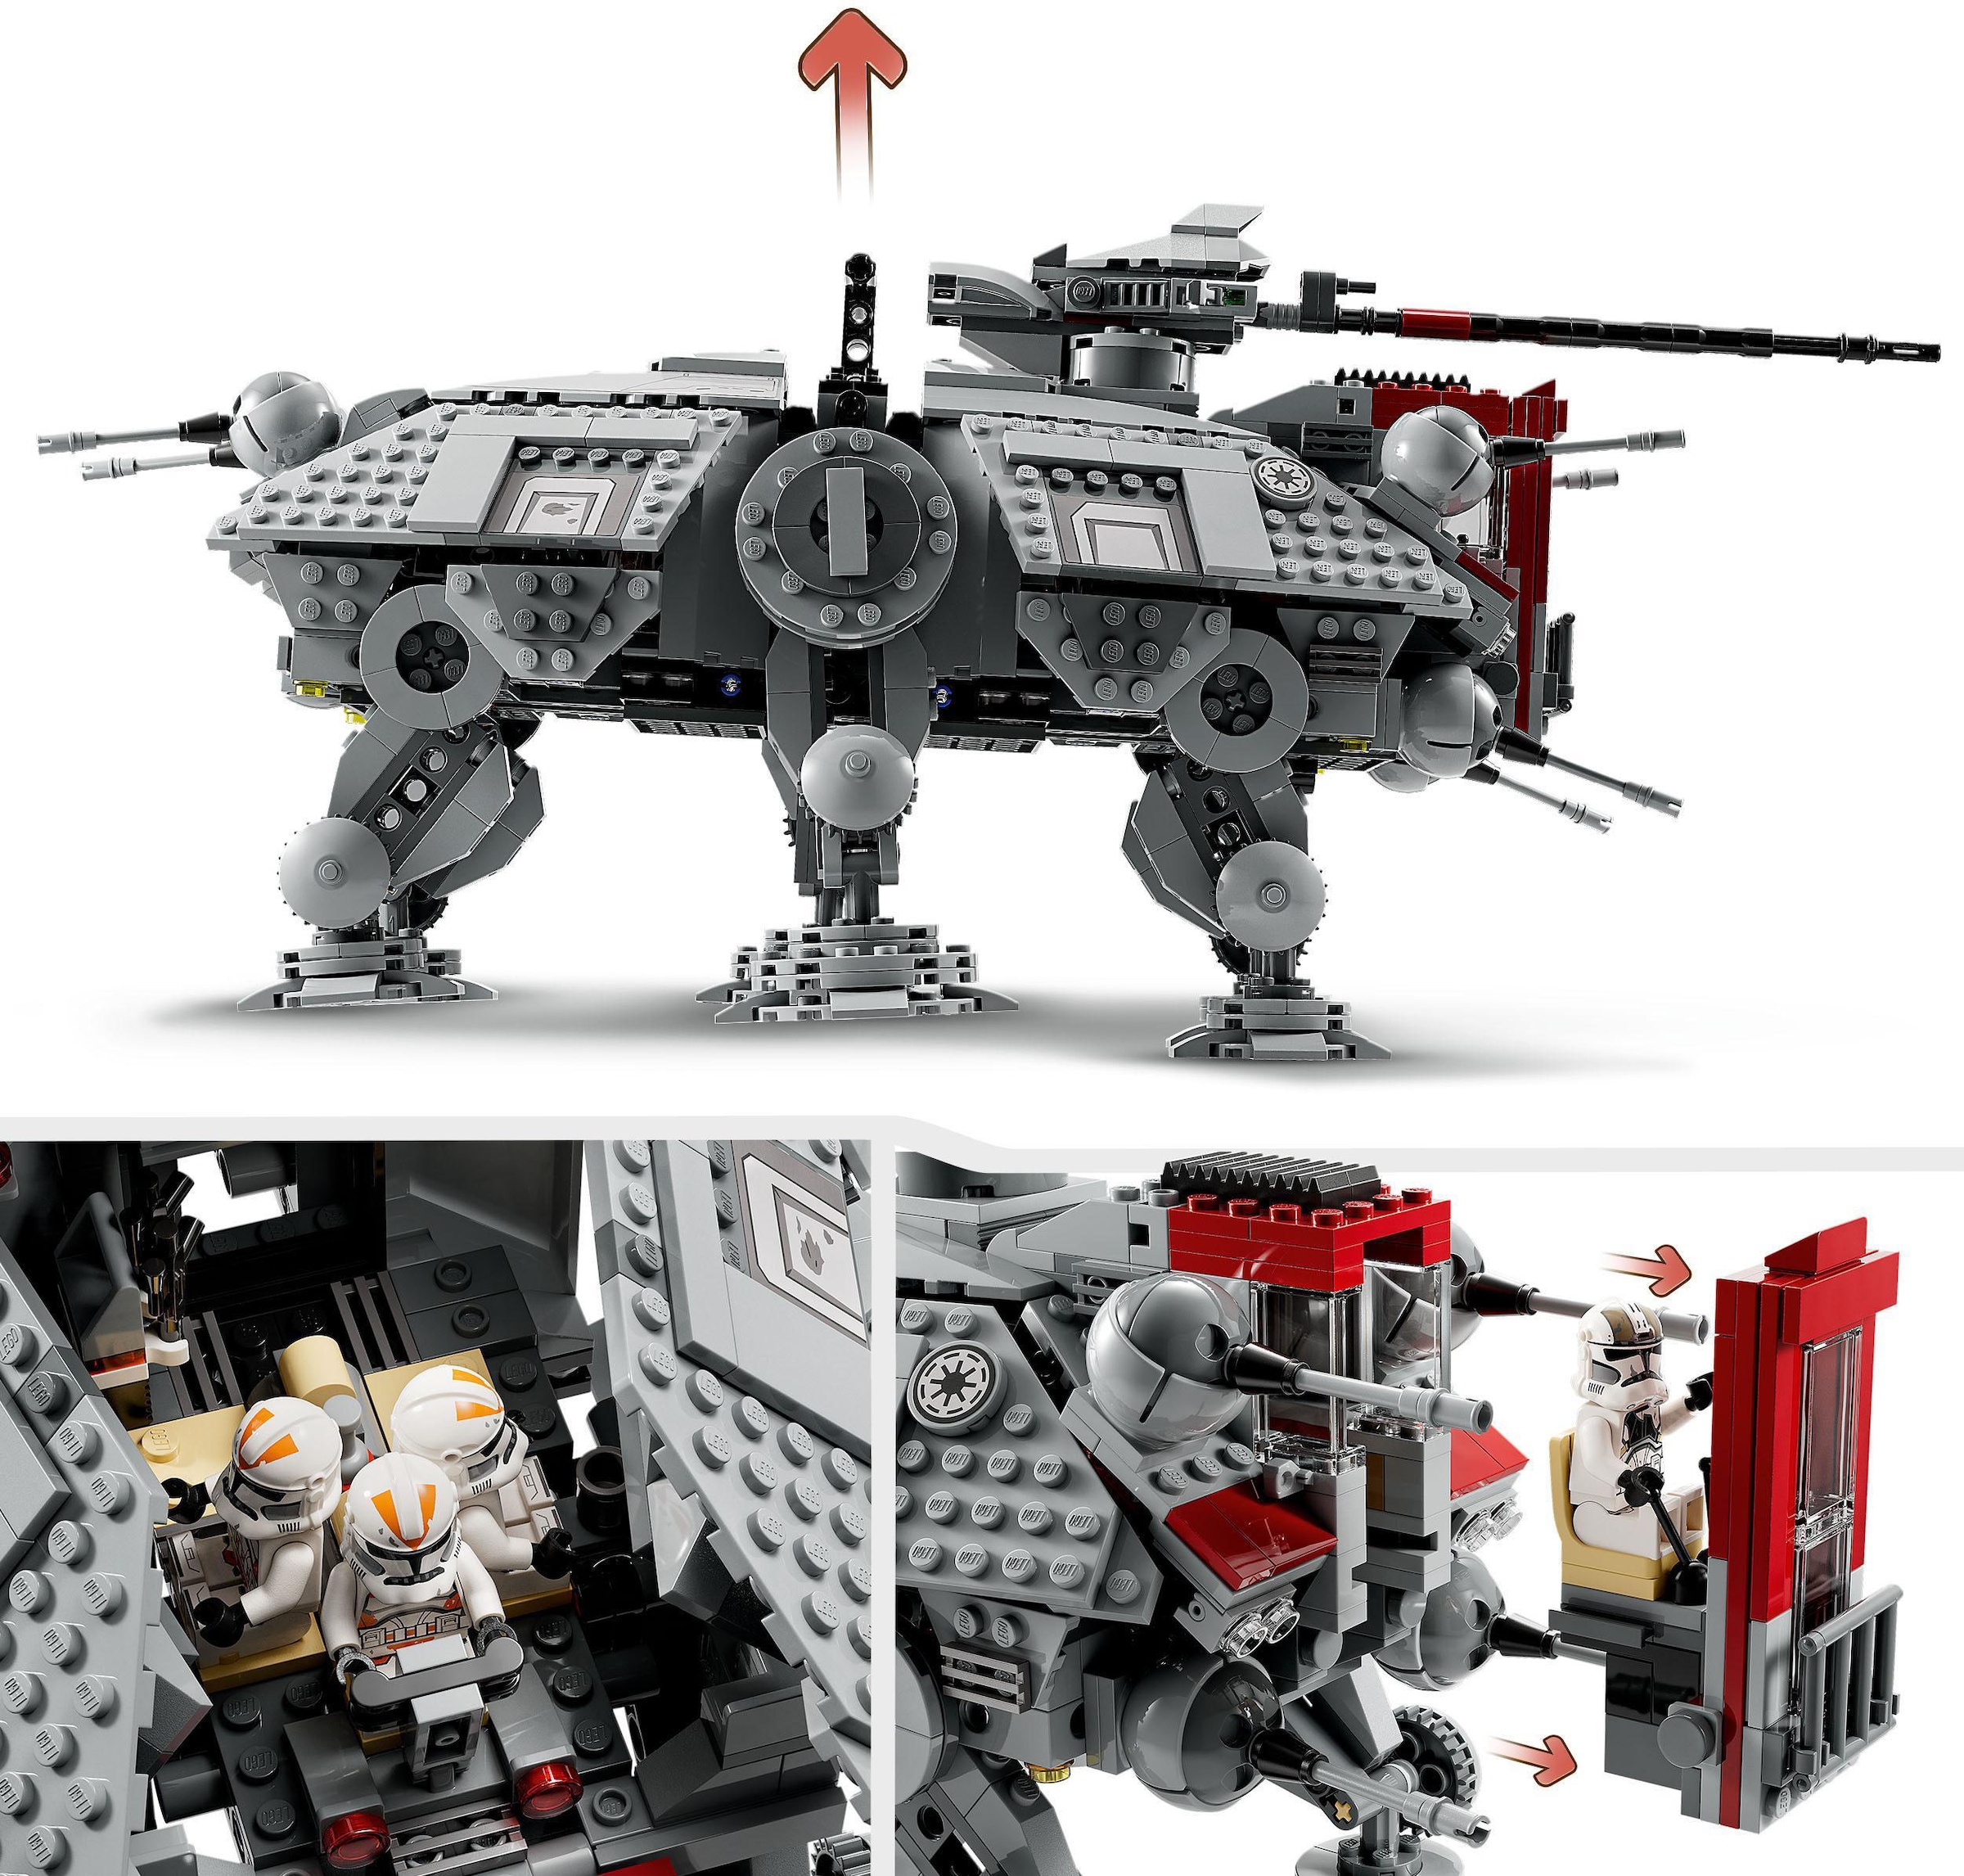 LEGO® Konstruktionsspielsteine »AT-TE Walker (75337), LEGO® Star Wars™«, (1082 St.), Made in Europe